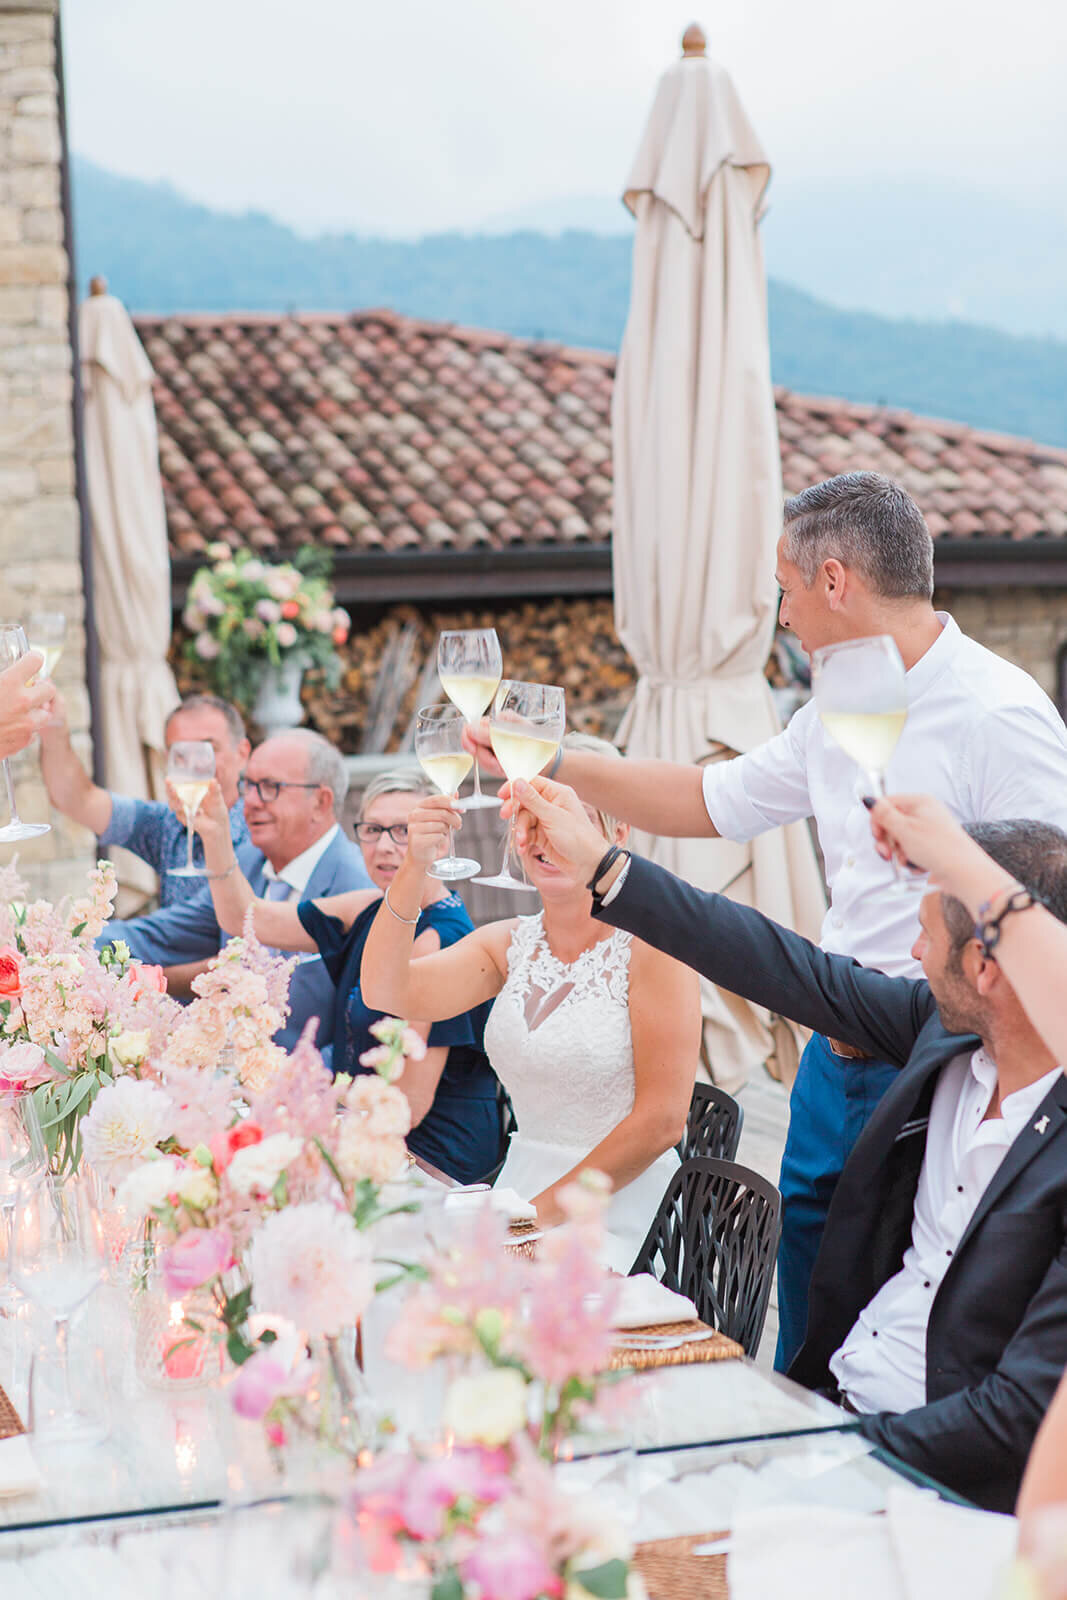 Wedding K&D - Lago d'Iseo - Italy 2018 48